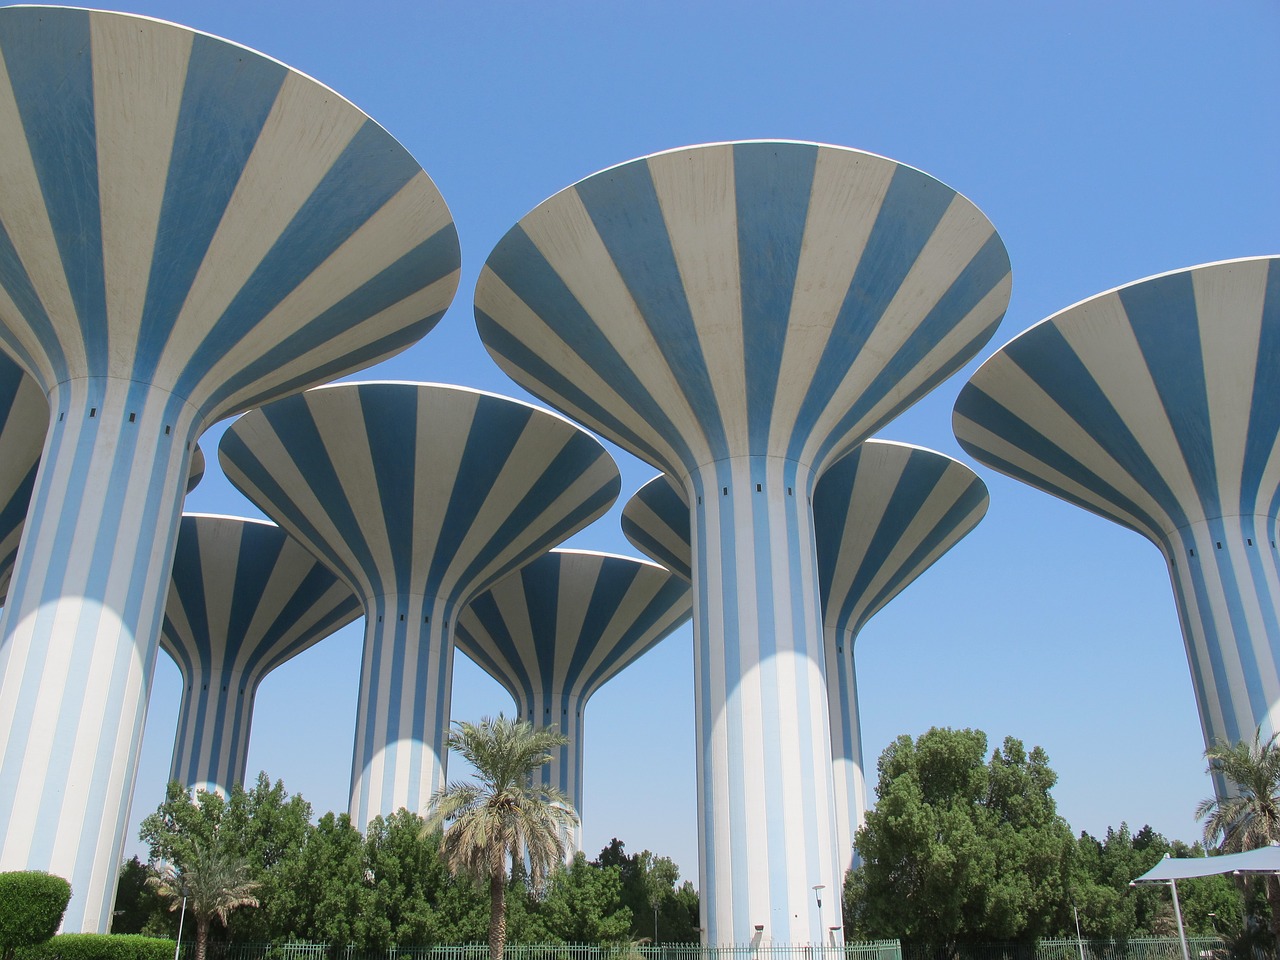 tourism in kuwait arabian gulf